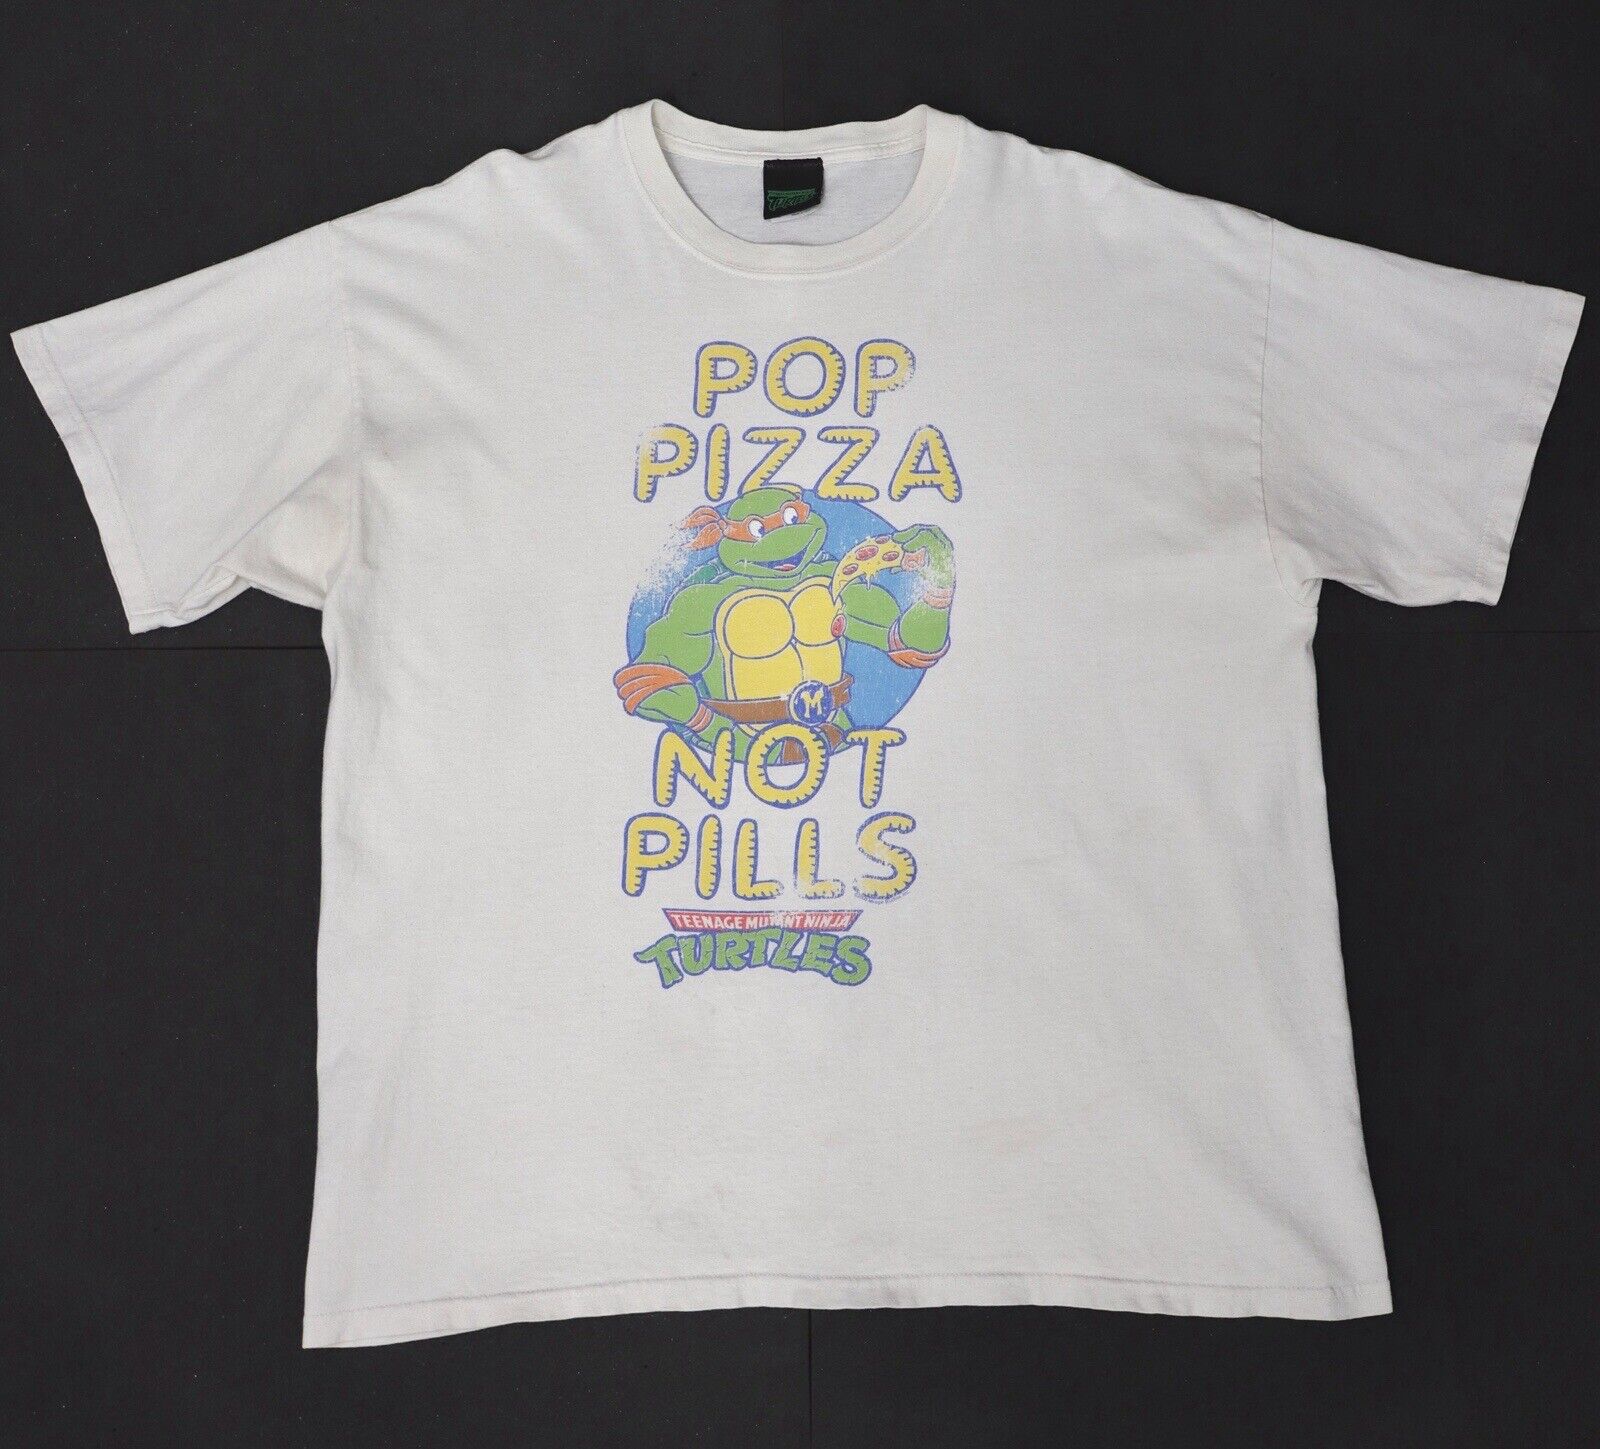 XL Teenage Mutant Ninja Turtles Pop Pizza Not Pills Vintage Shirt 2005 🚫 Drugs